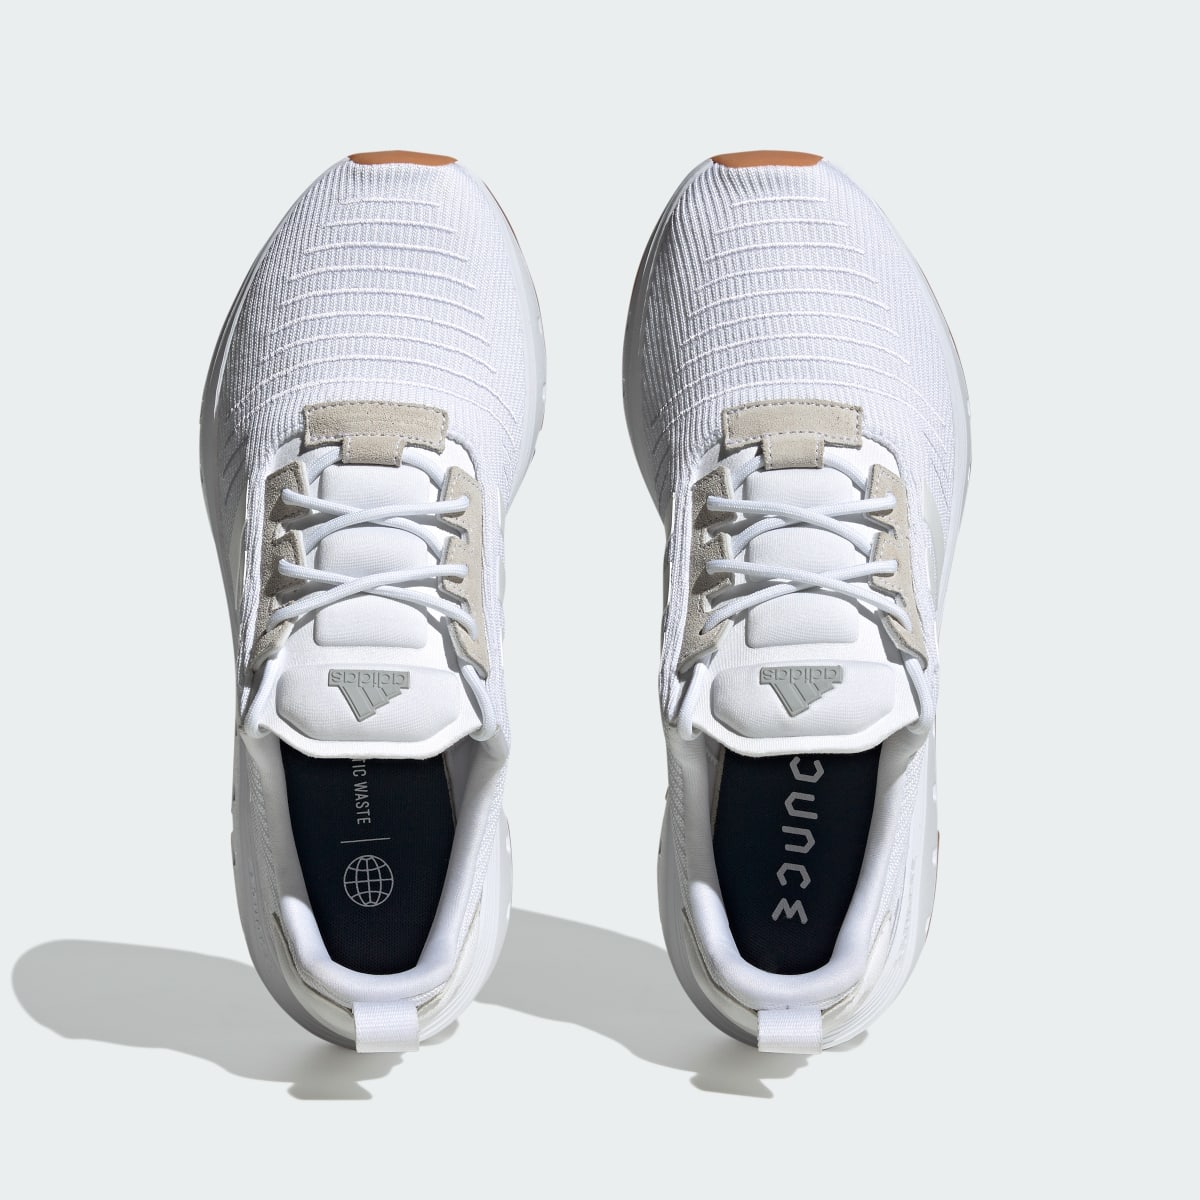 Adidas Swift Run Schuh. 6